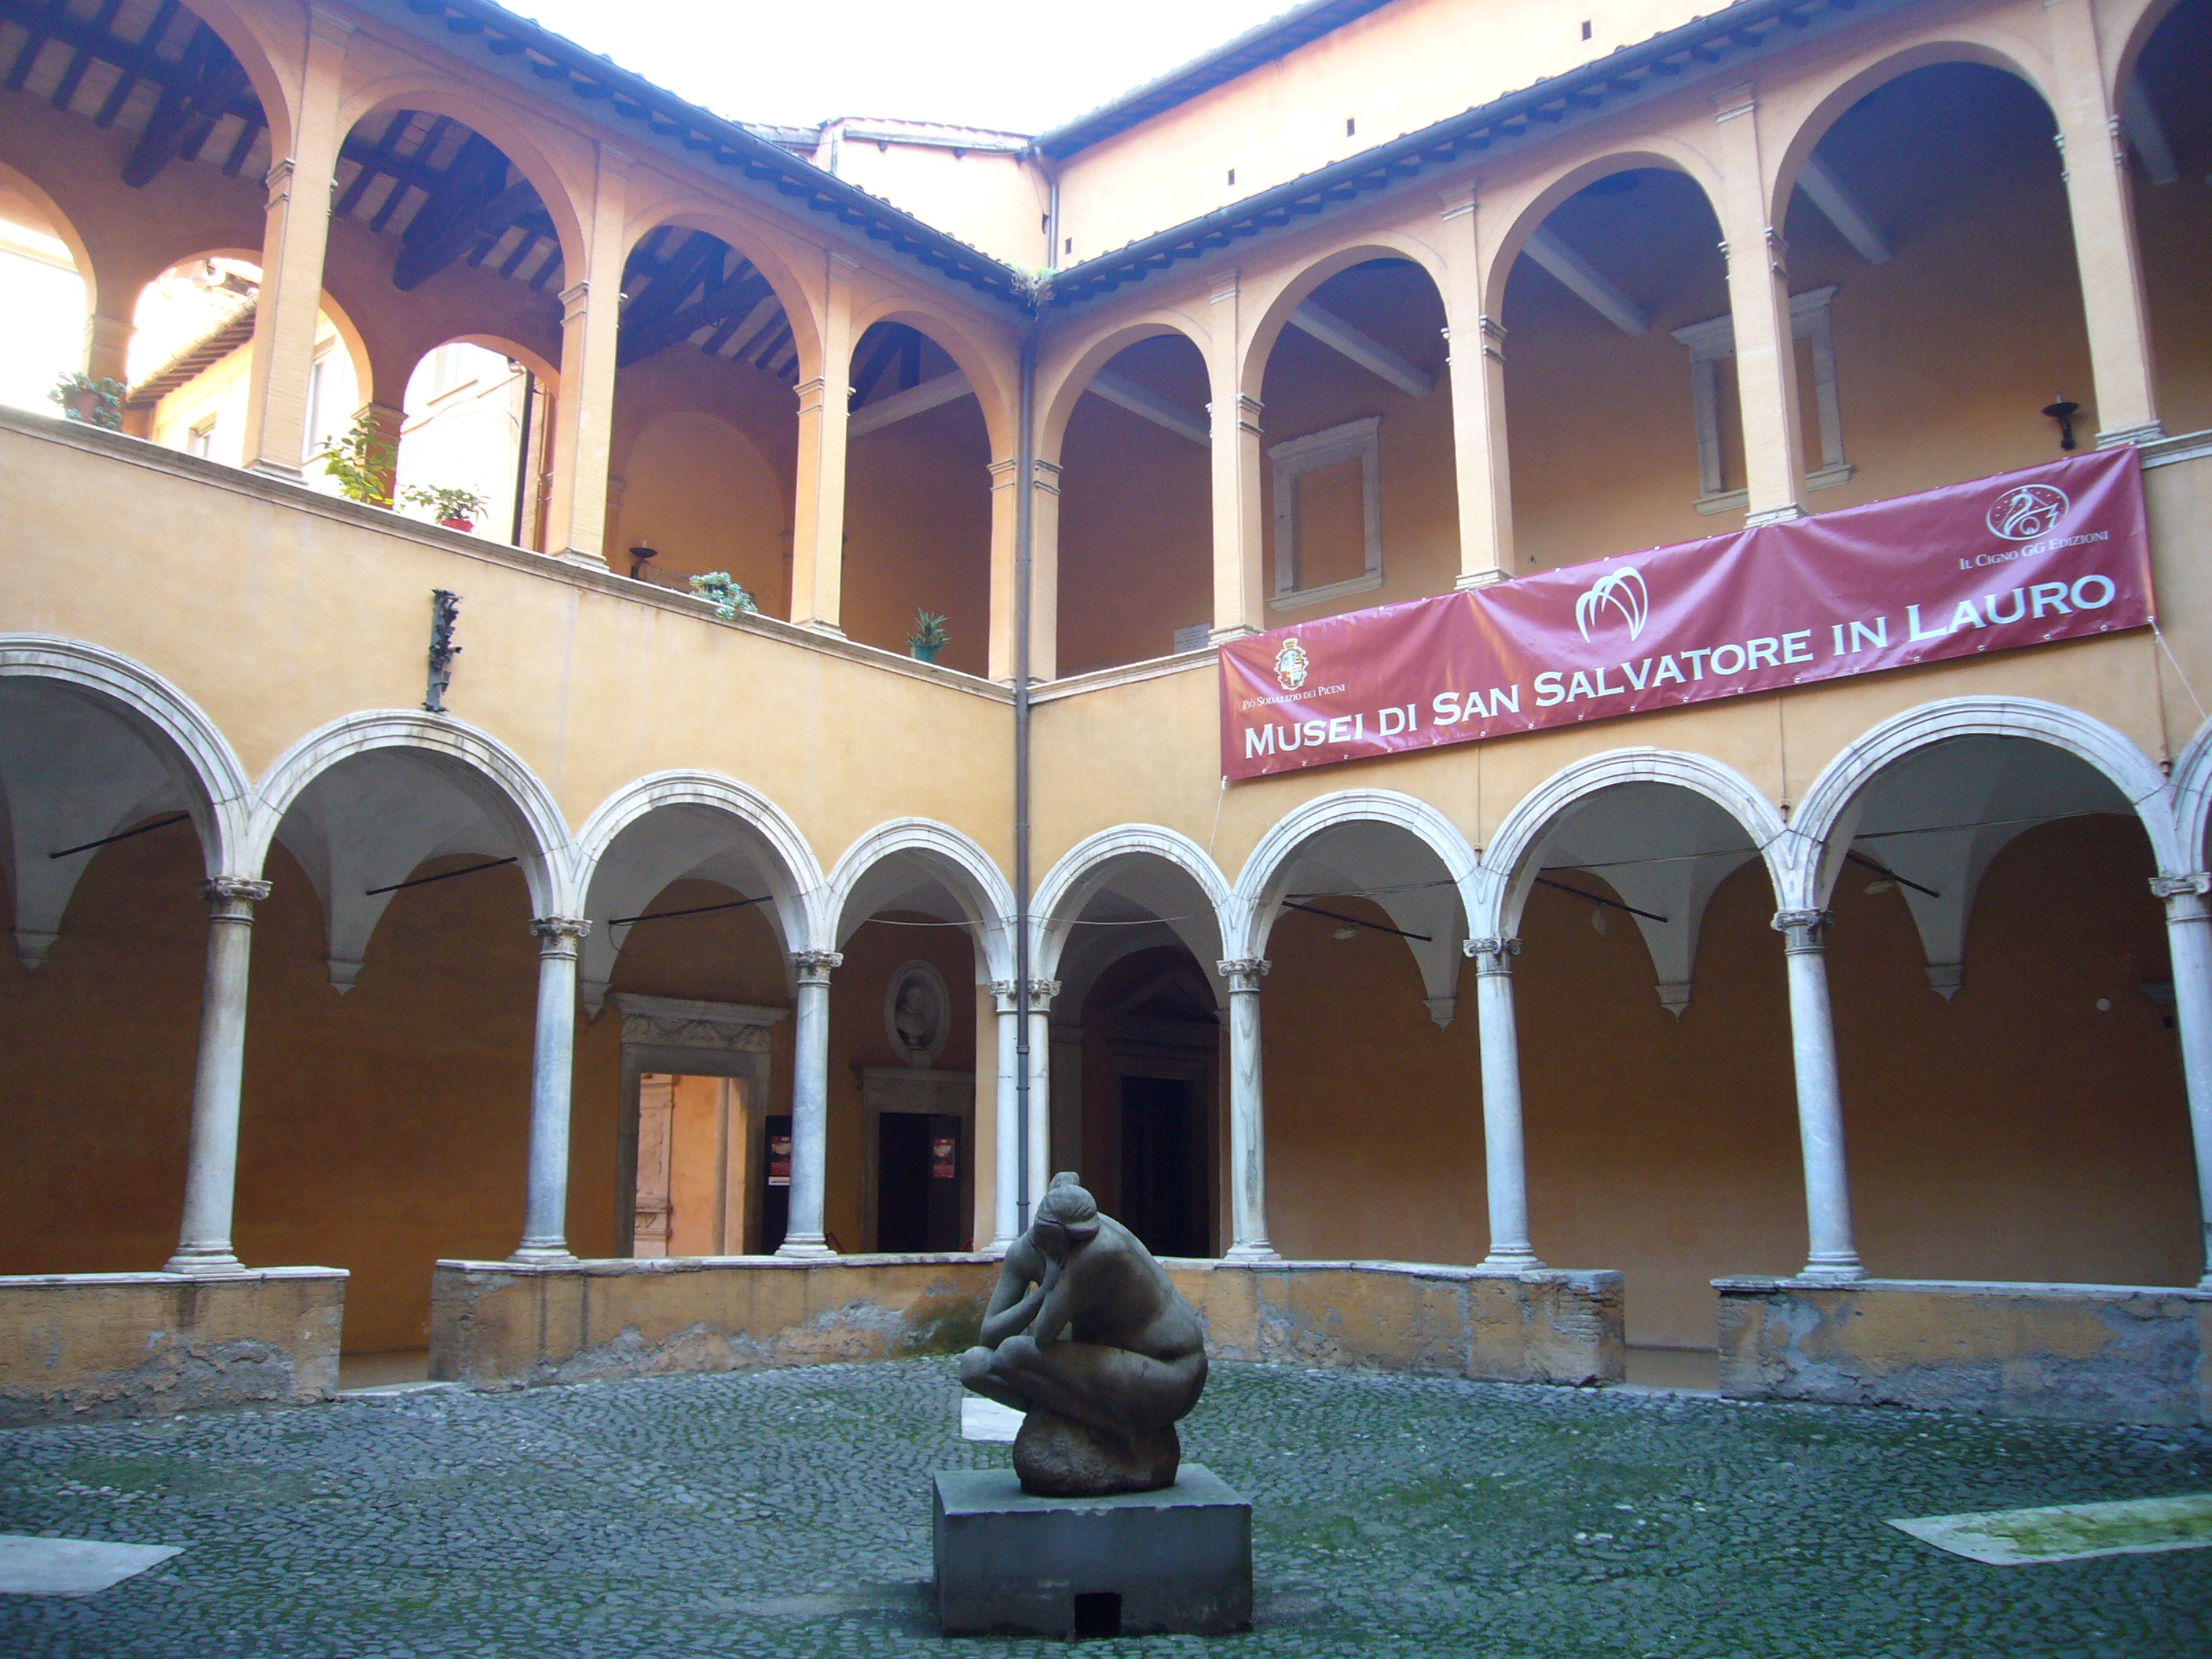 Museo San Salvatore in Lauro